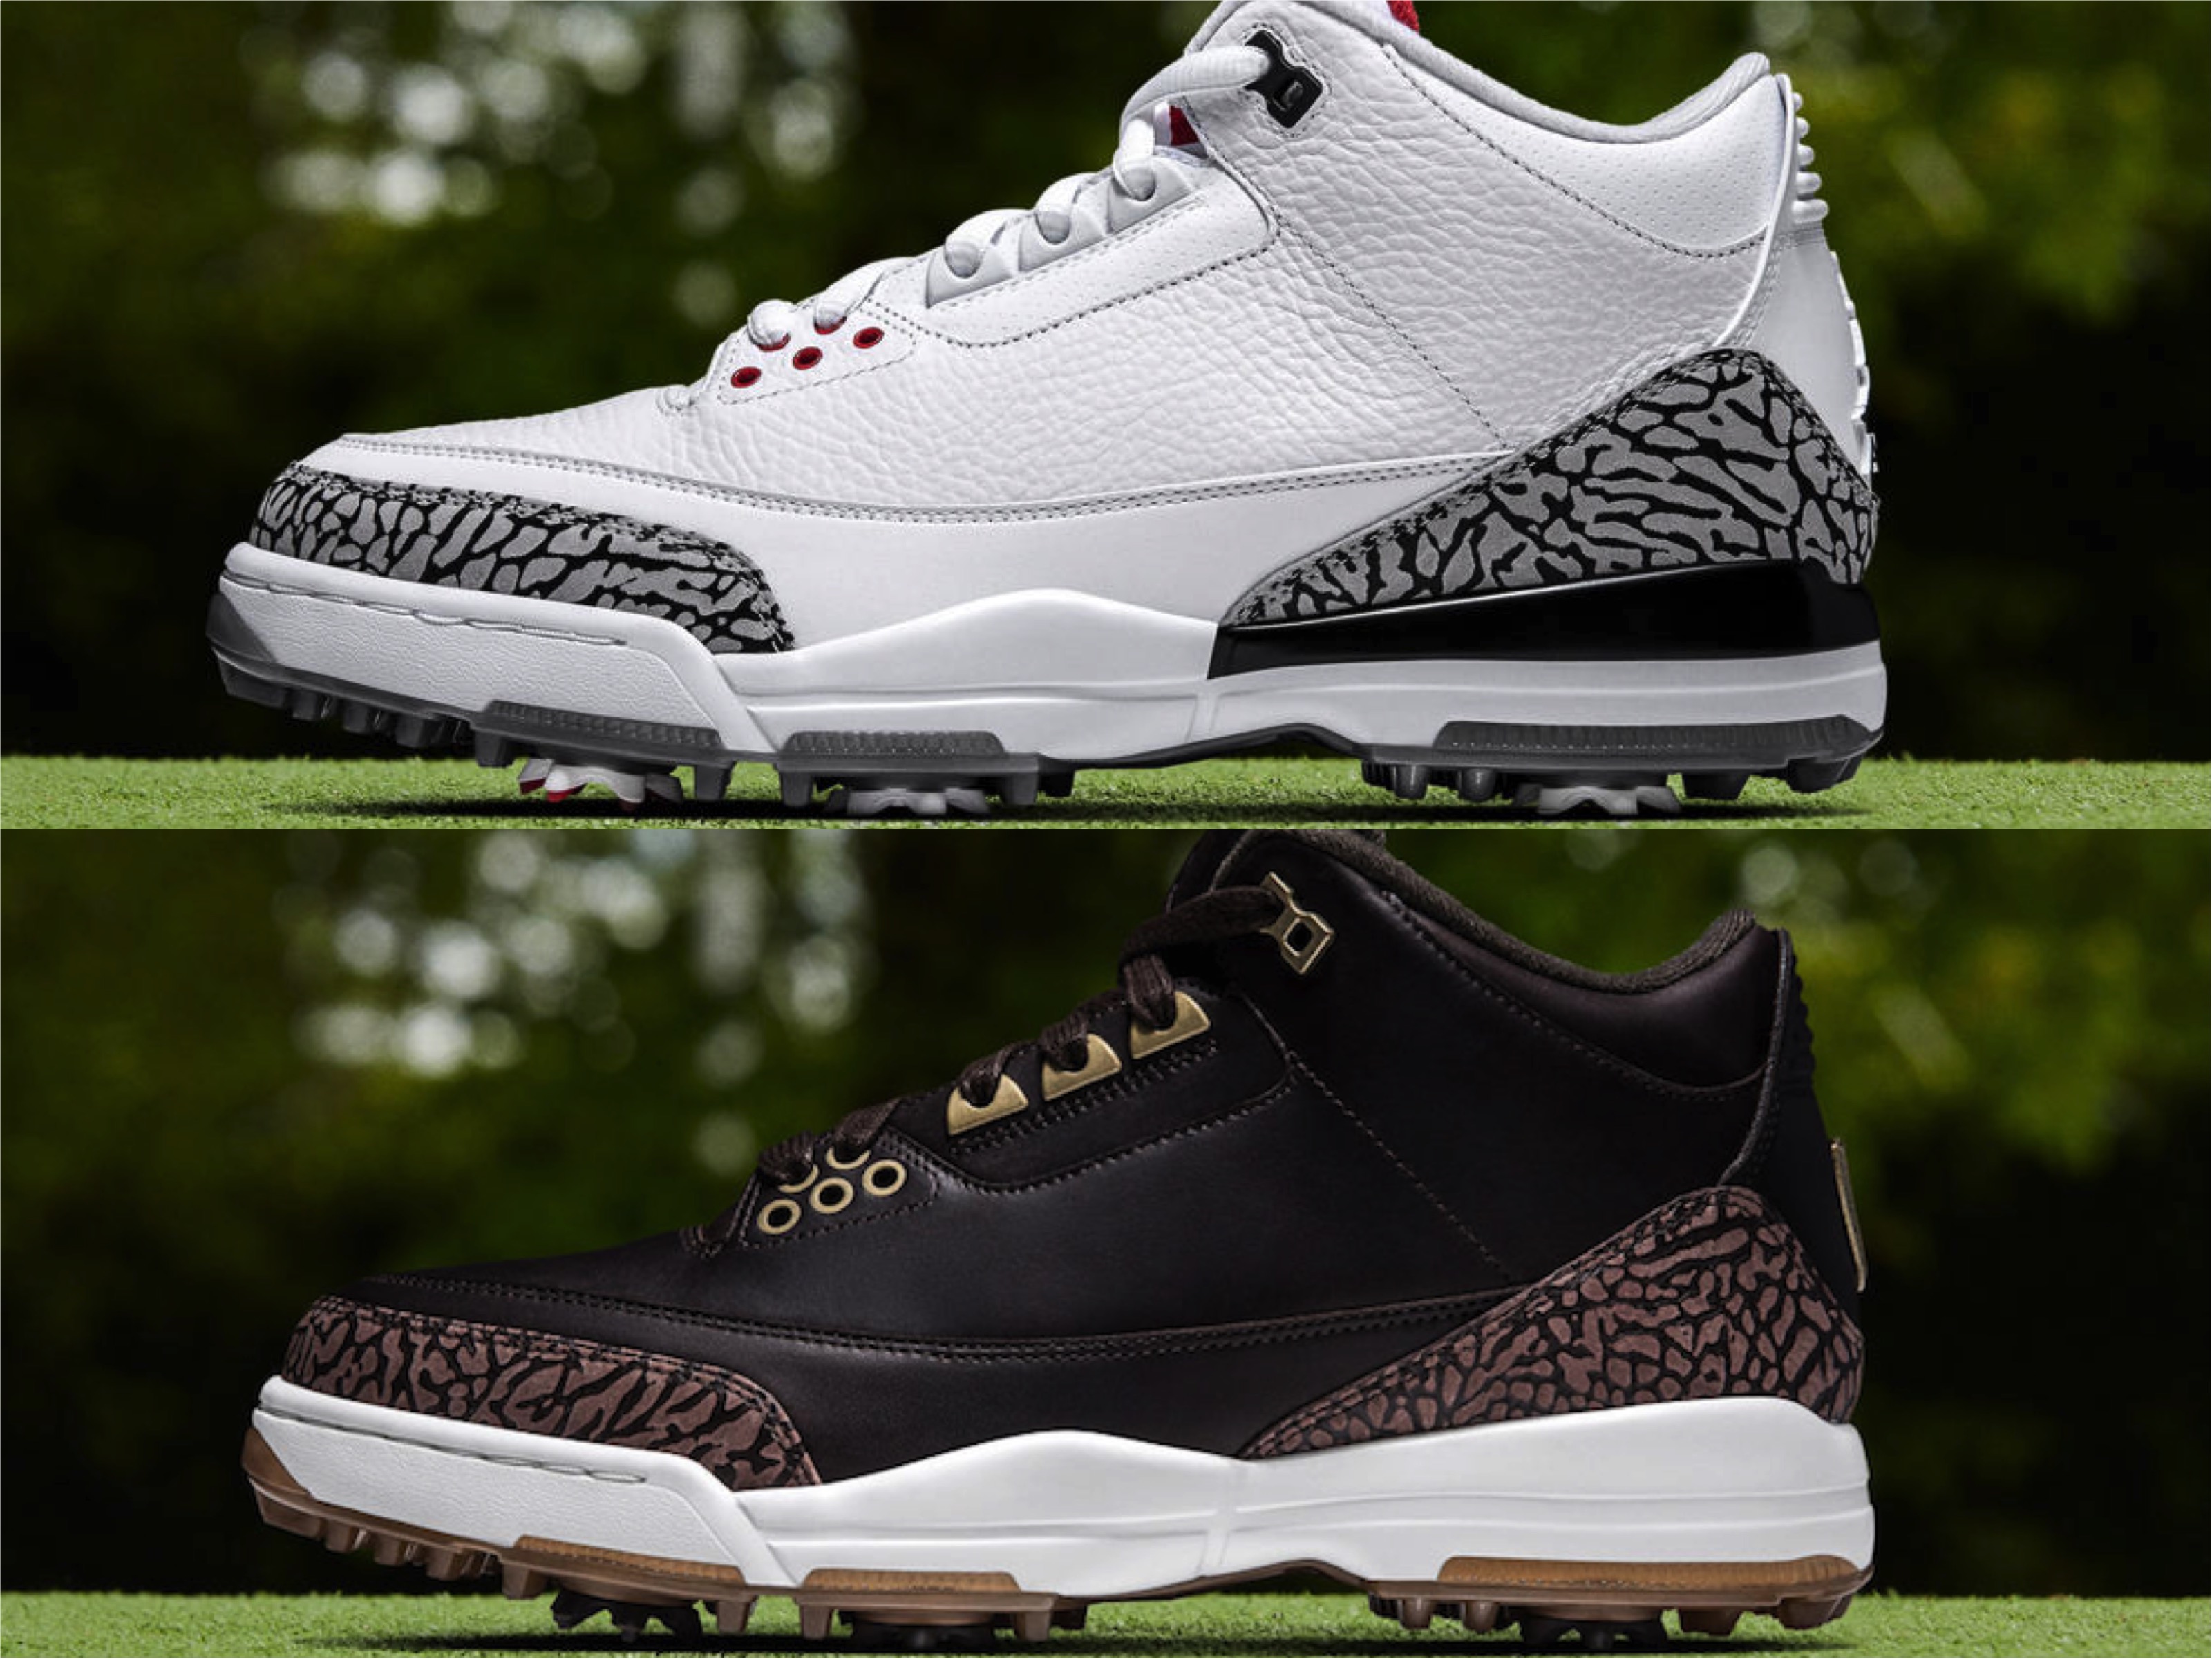 Nike to release Air Jordan III golf shoes on Feb. 16 GolfWRX